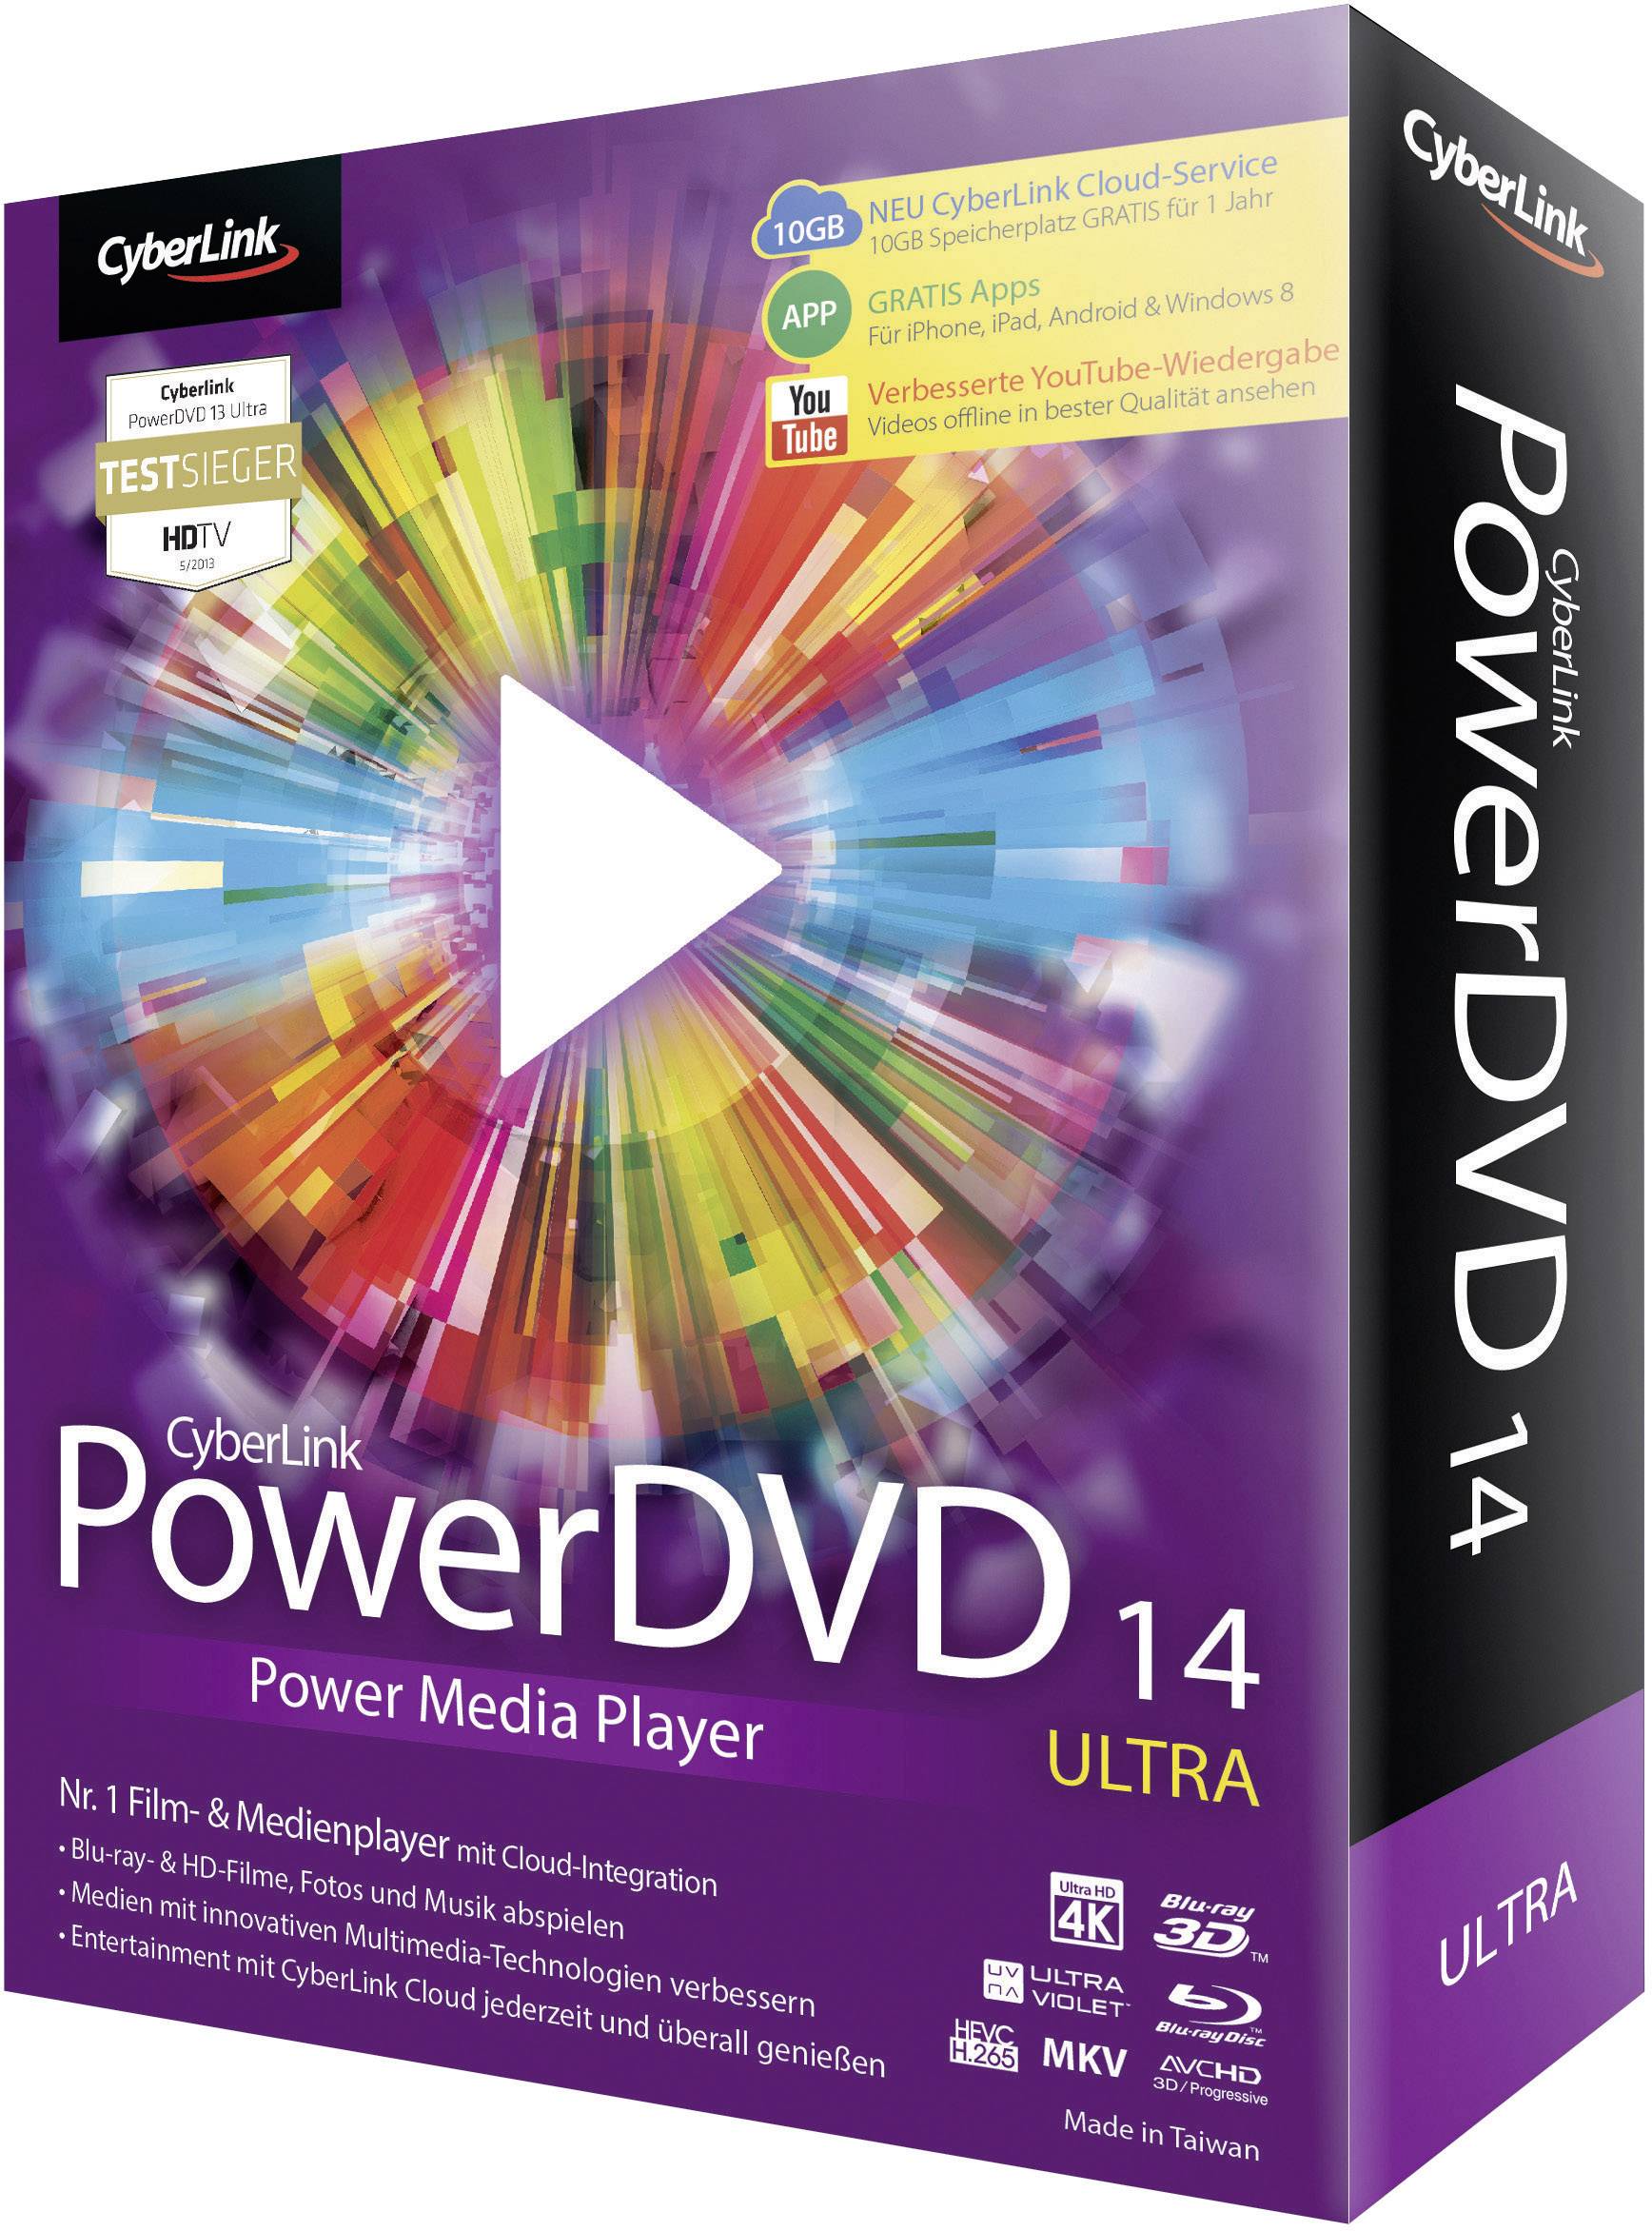 powerdvd 14 ultra